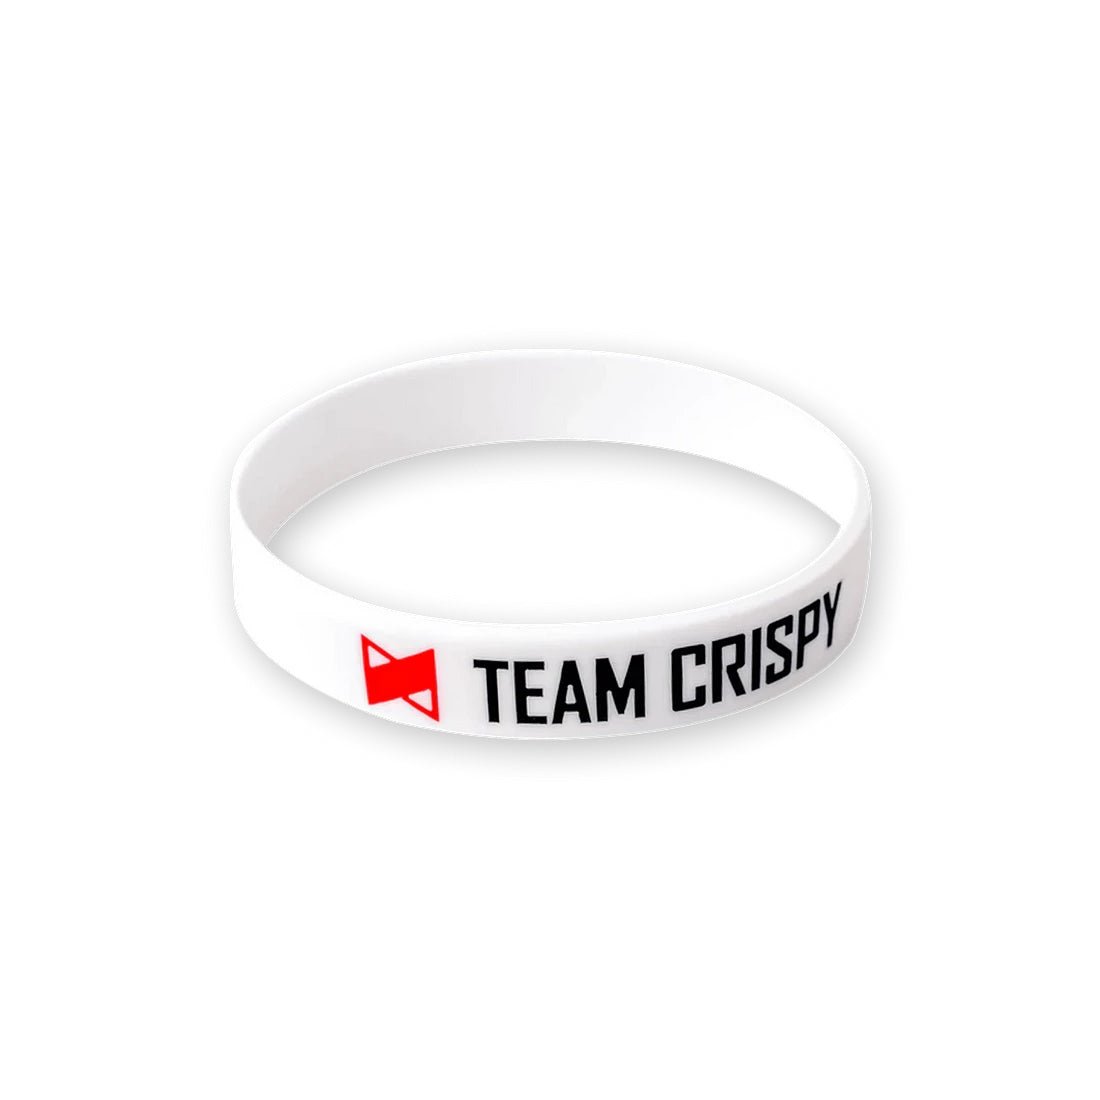 MKBHD Team Crispy Wristband - أكسسوار - Store 974 | ستور ٩٧٤